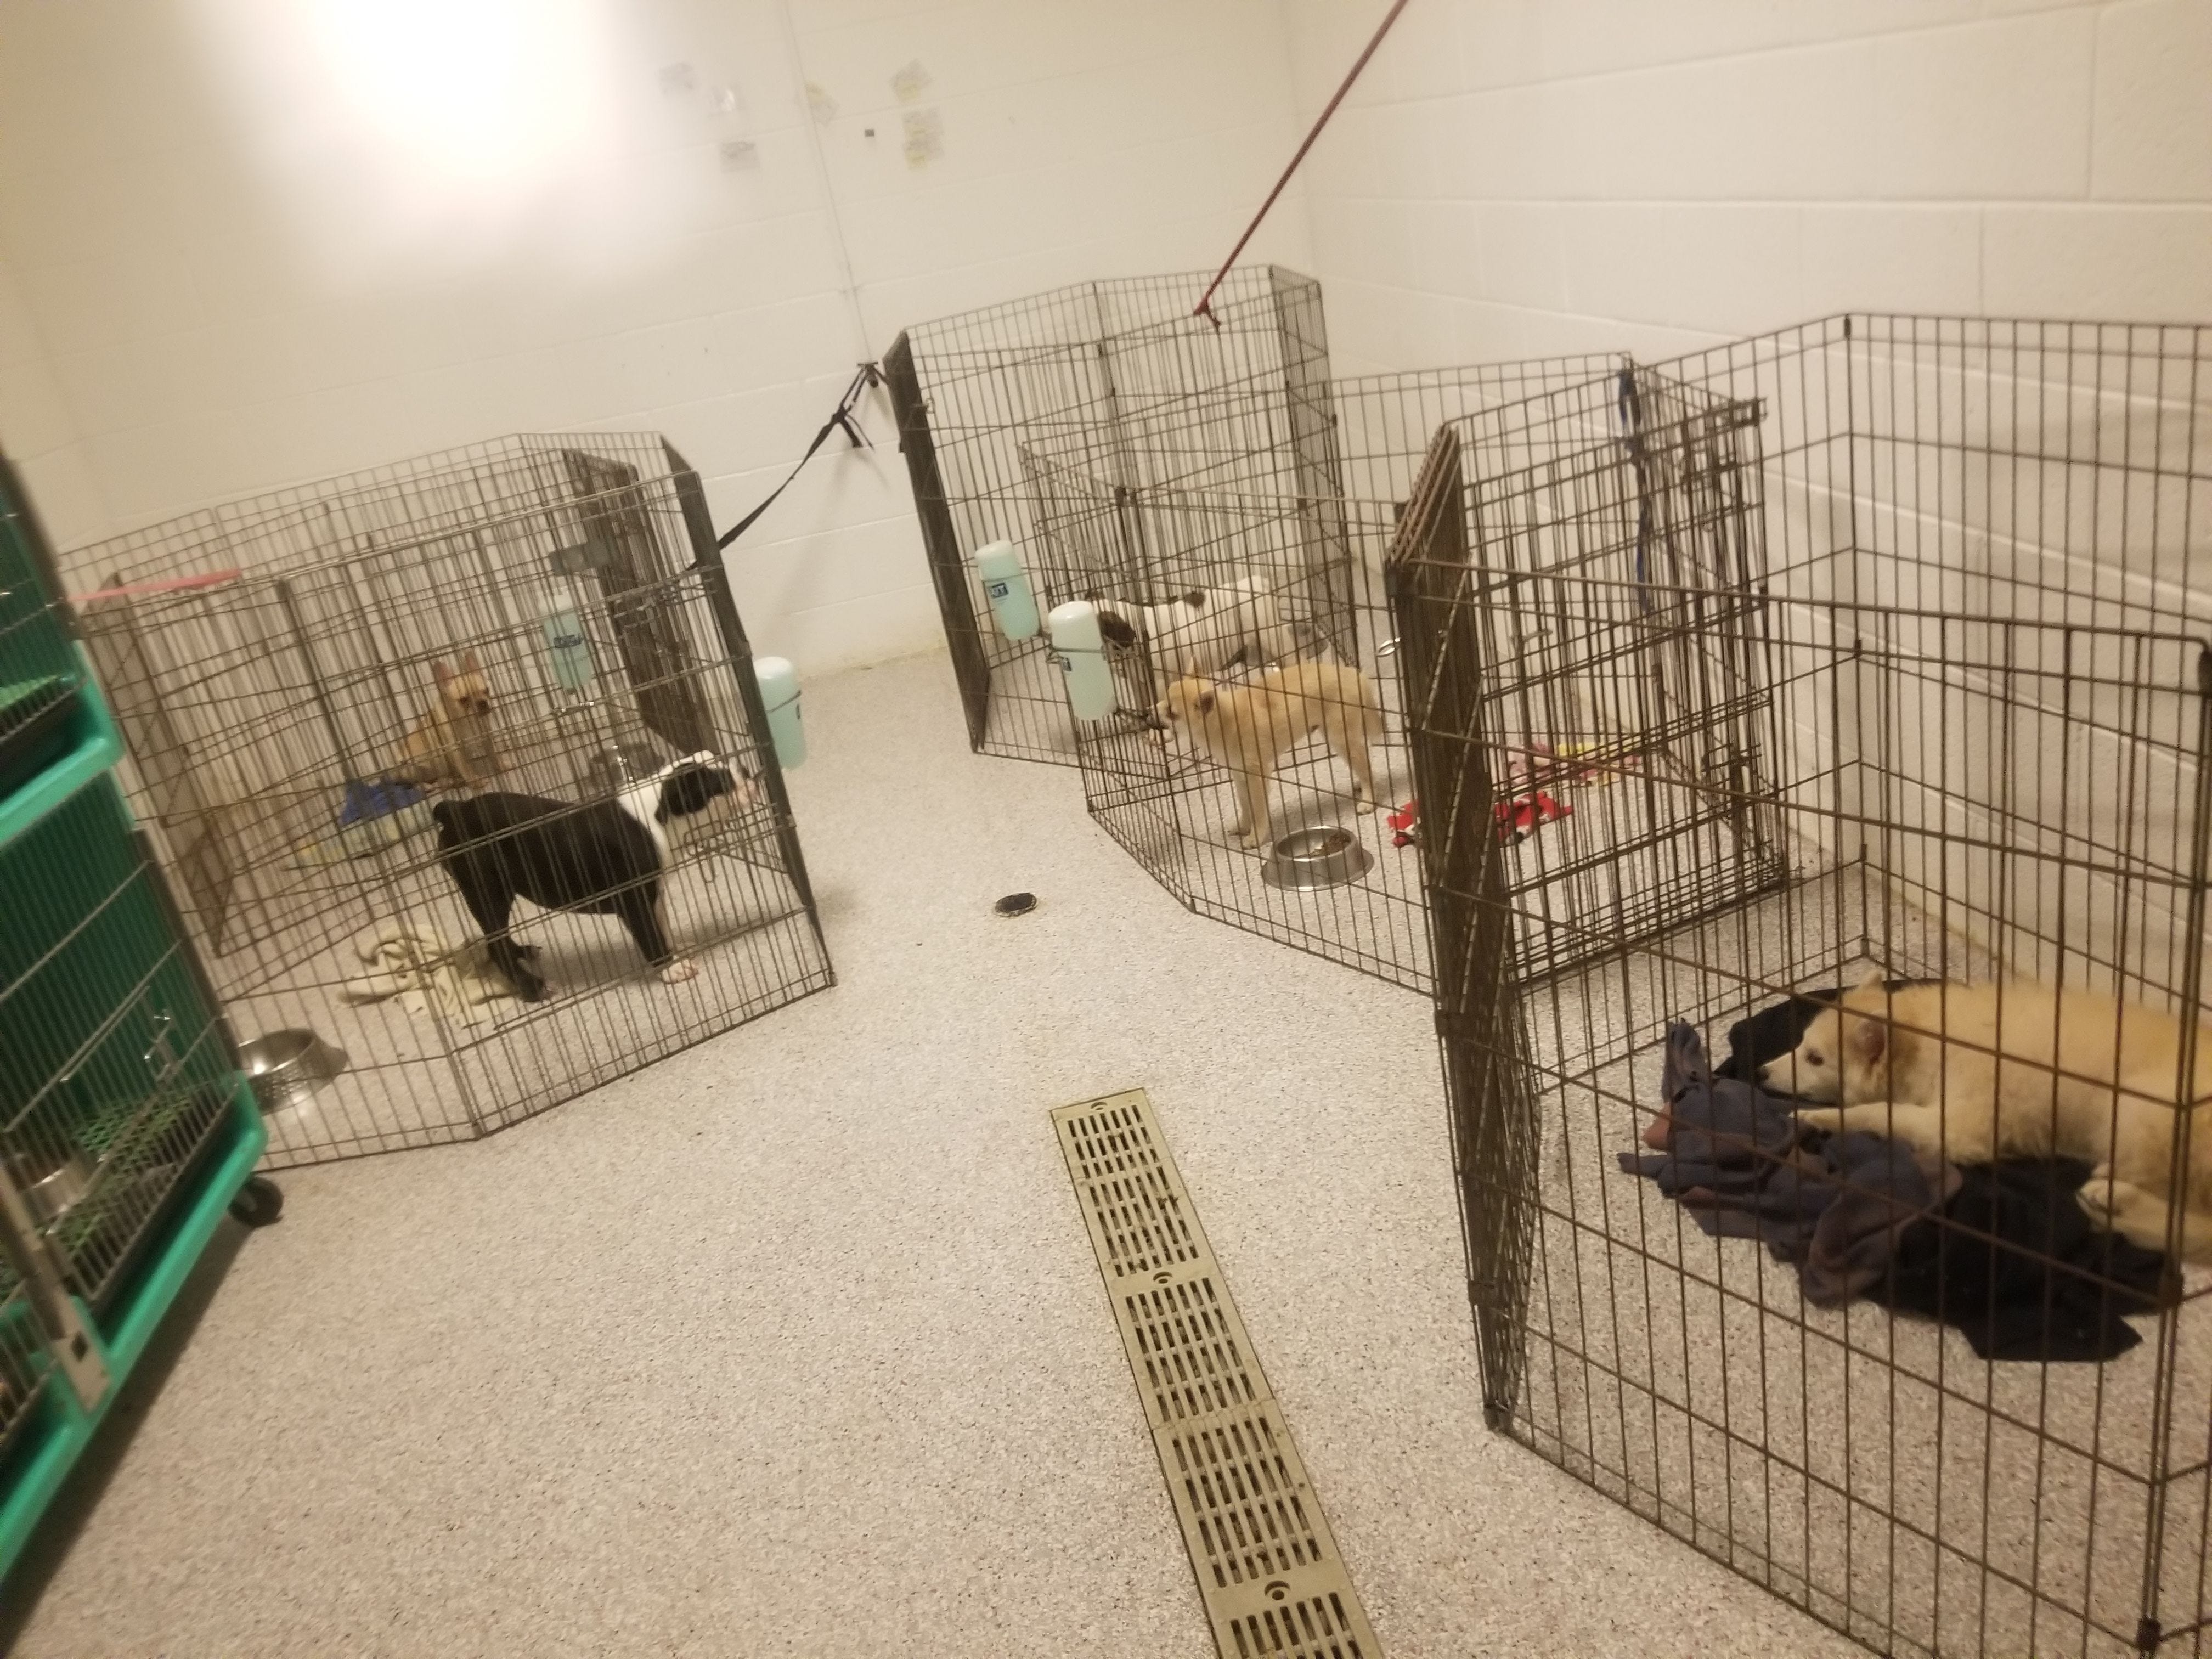 Animal Kingdom, Puppies 'N Love accused 